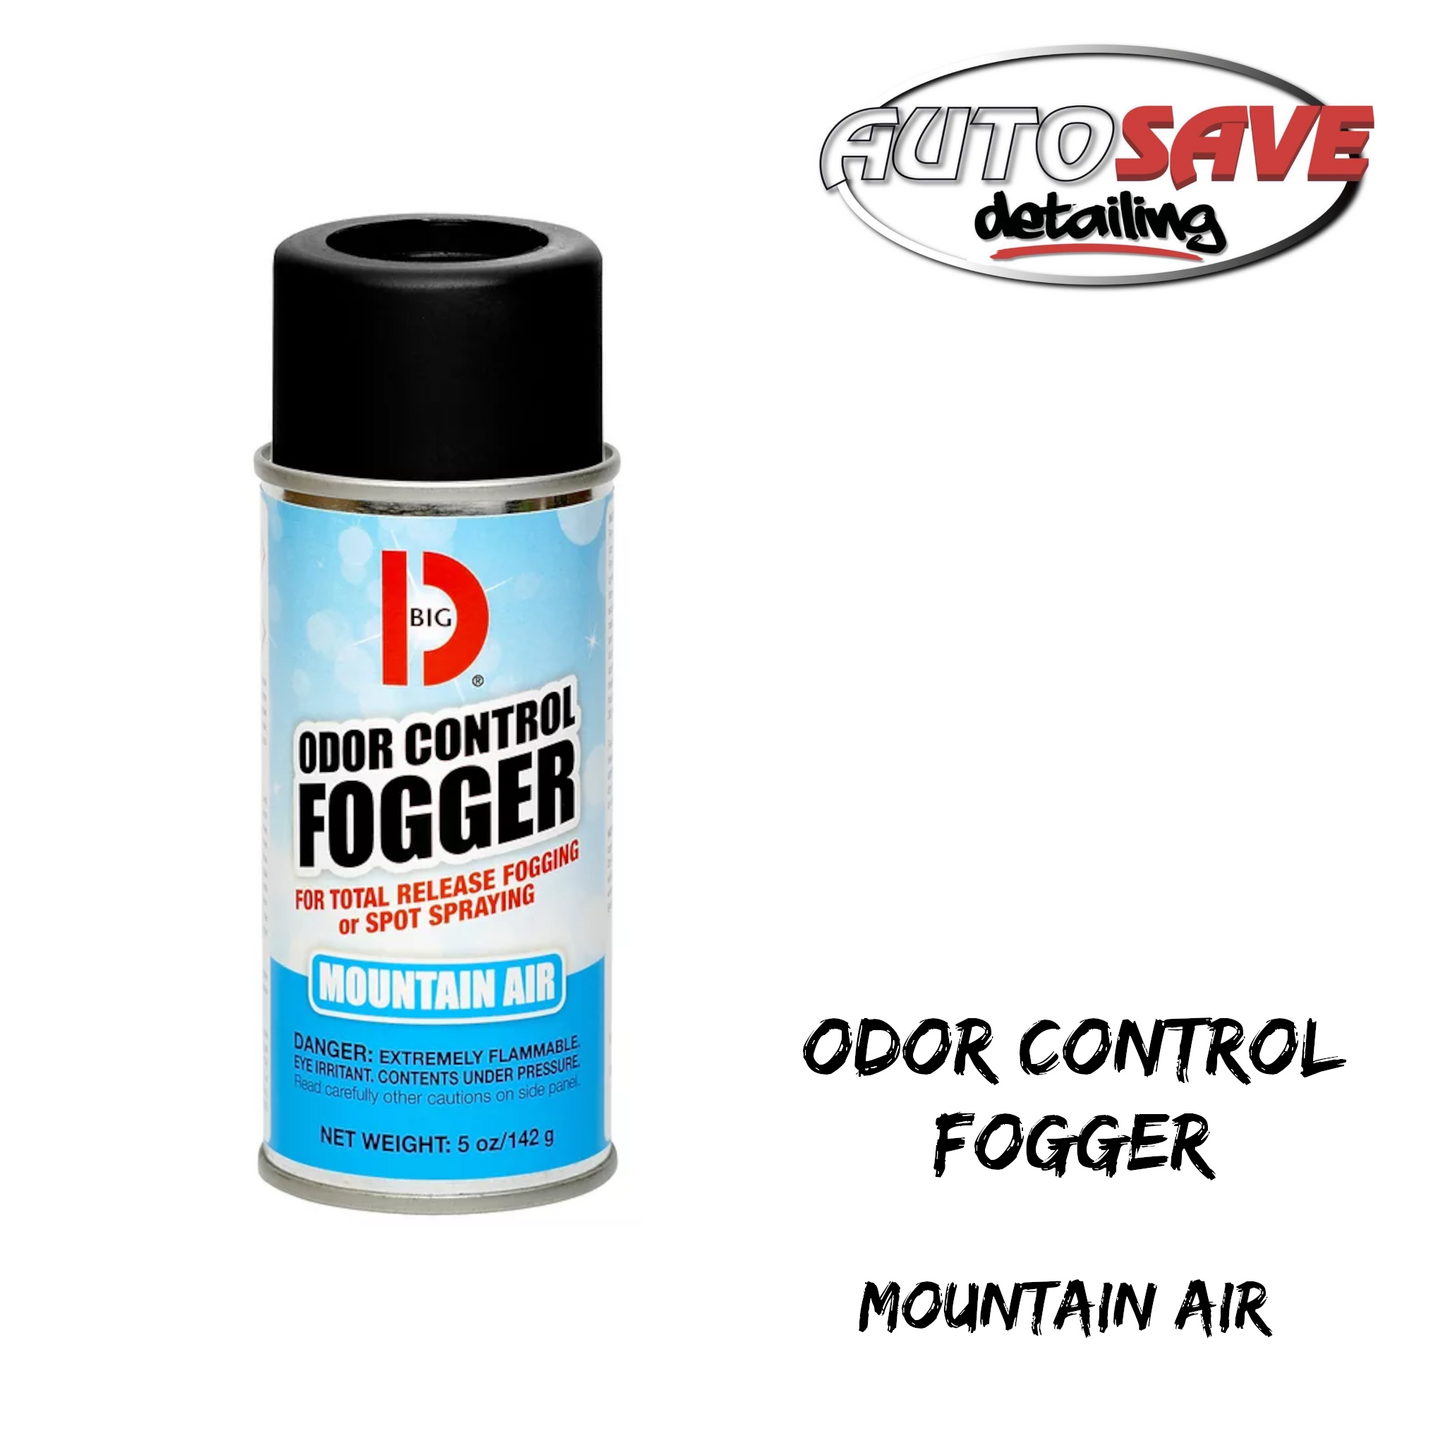 Big D Odor Control Fogger - Mountain Air